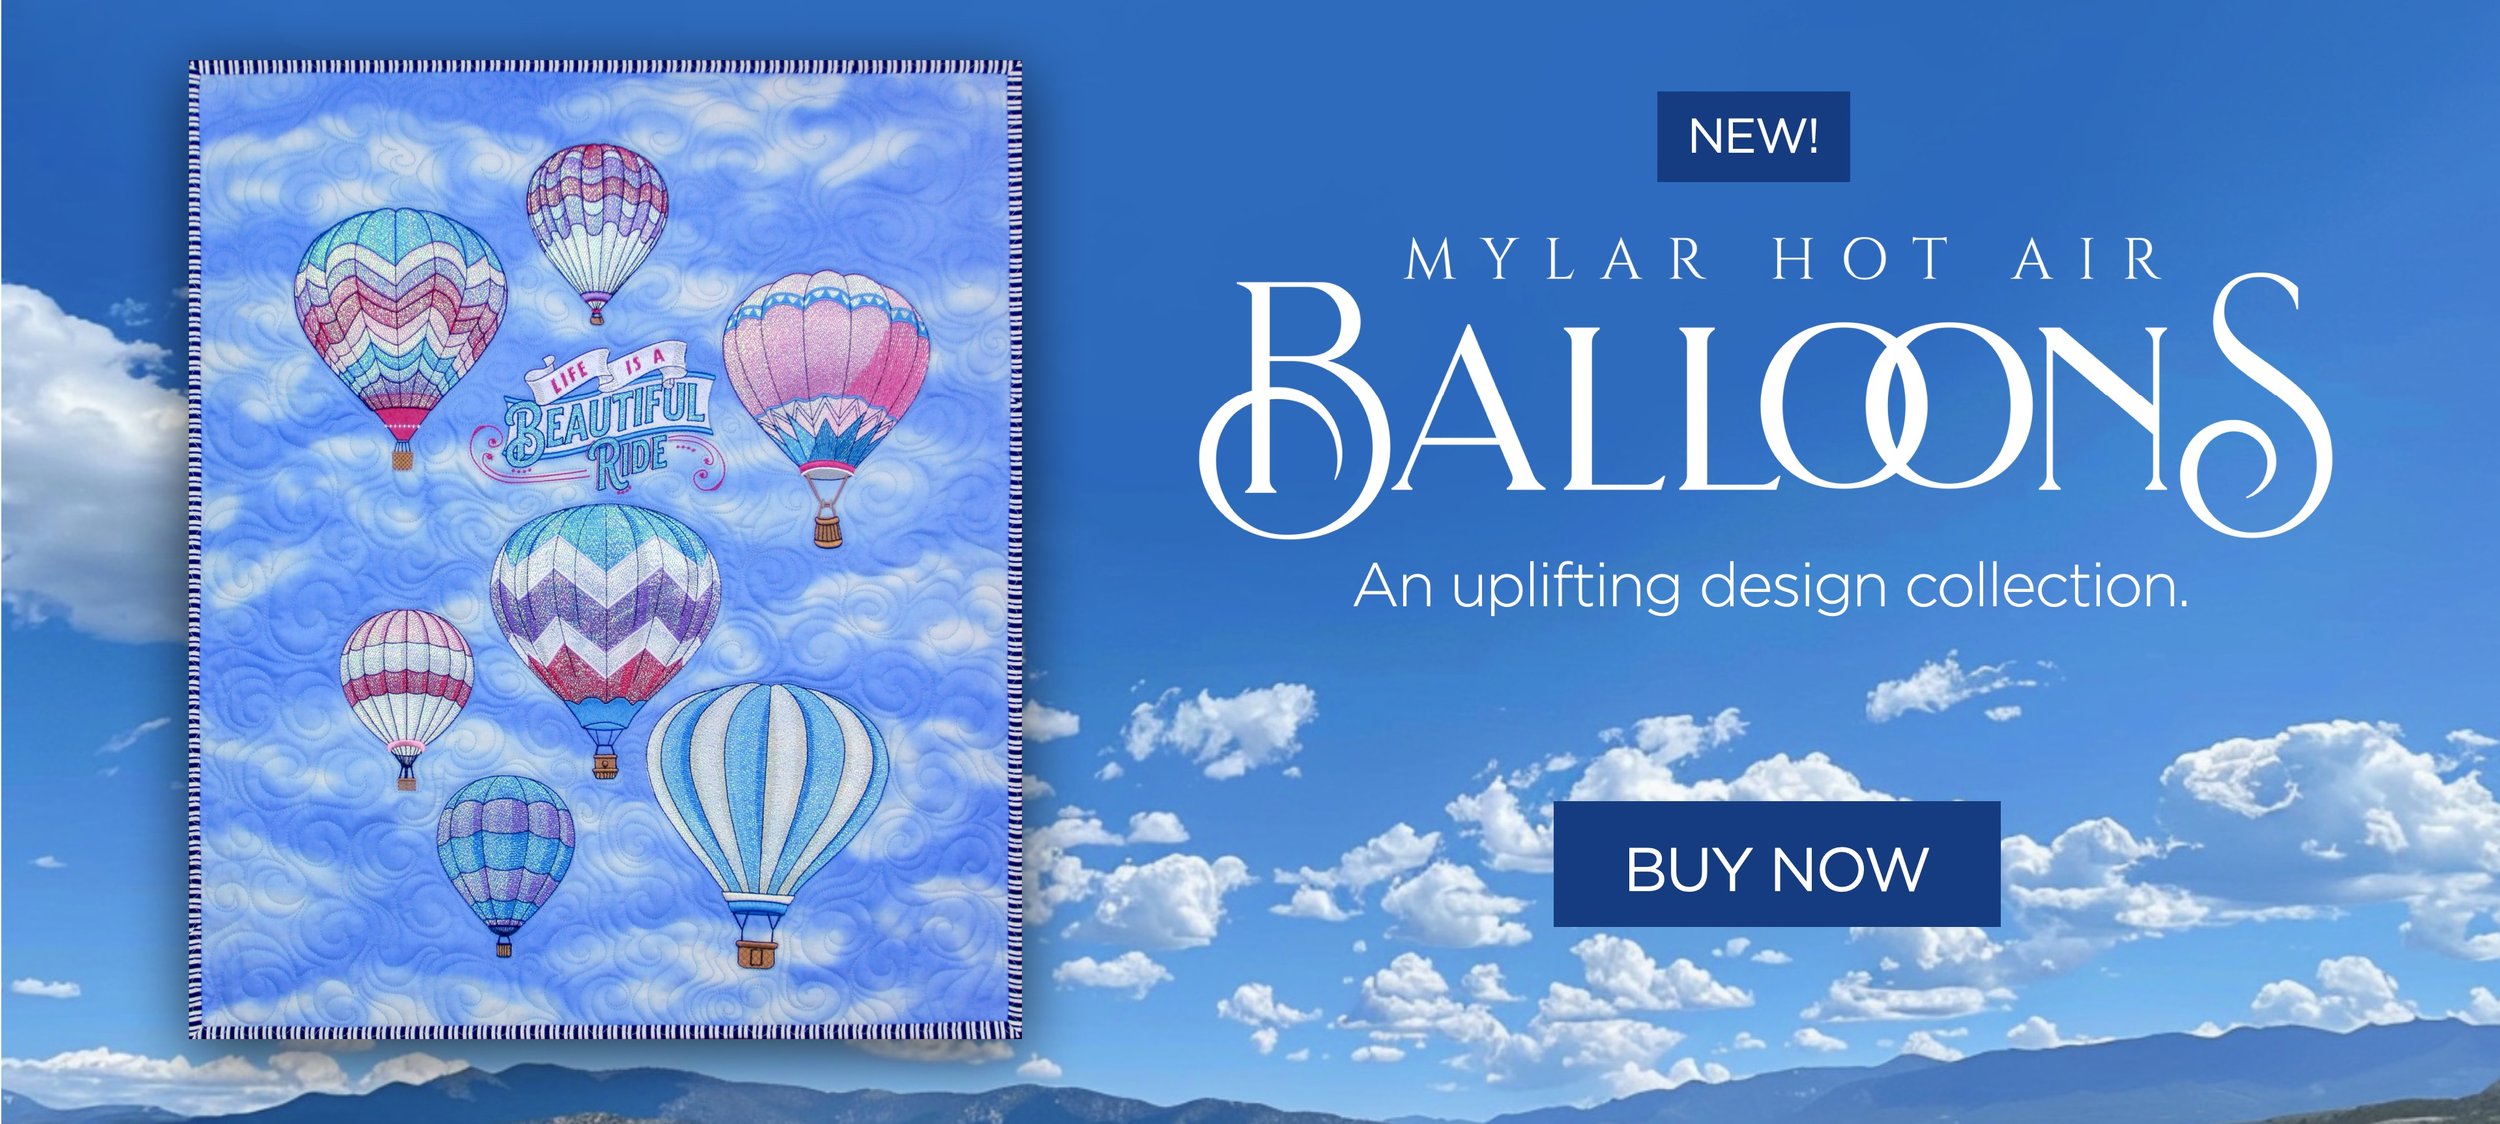 Mylar Hot Air Ballons